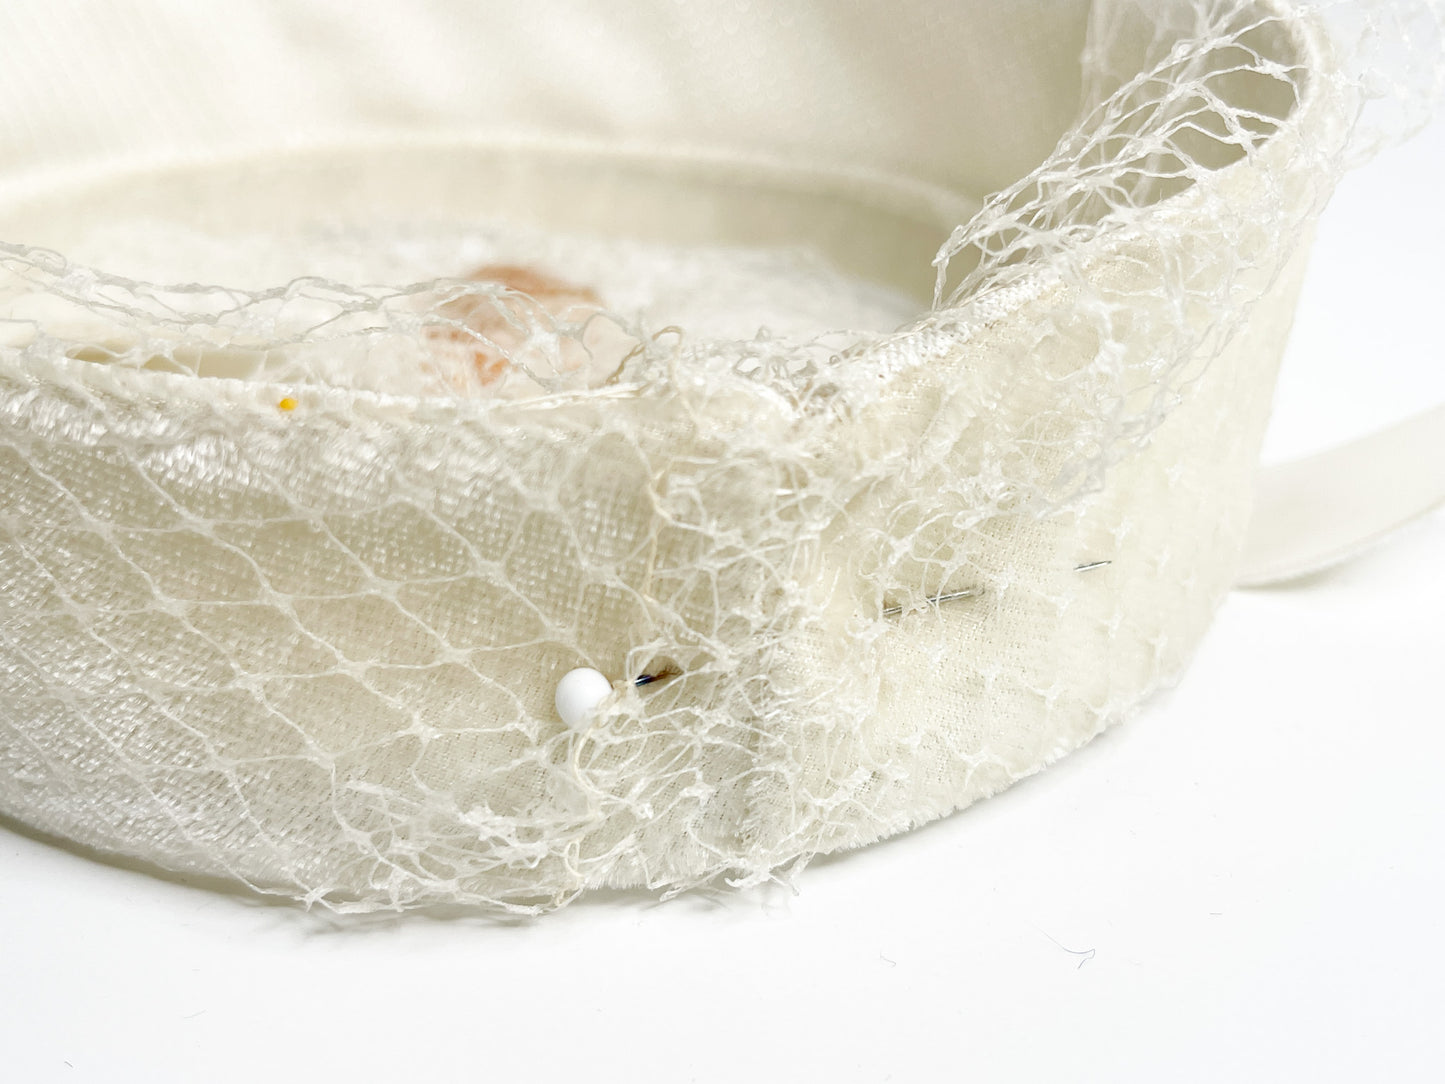 Vintage White Velvet Veiled Wedding Hat with Veil Detail |Veiled Vintage Woven Pill box Hat | 1960s Rounded Hat